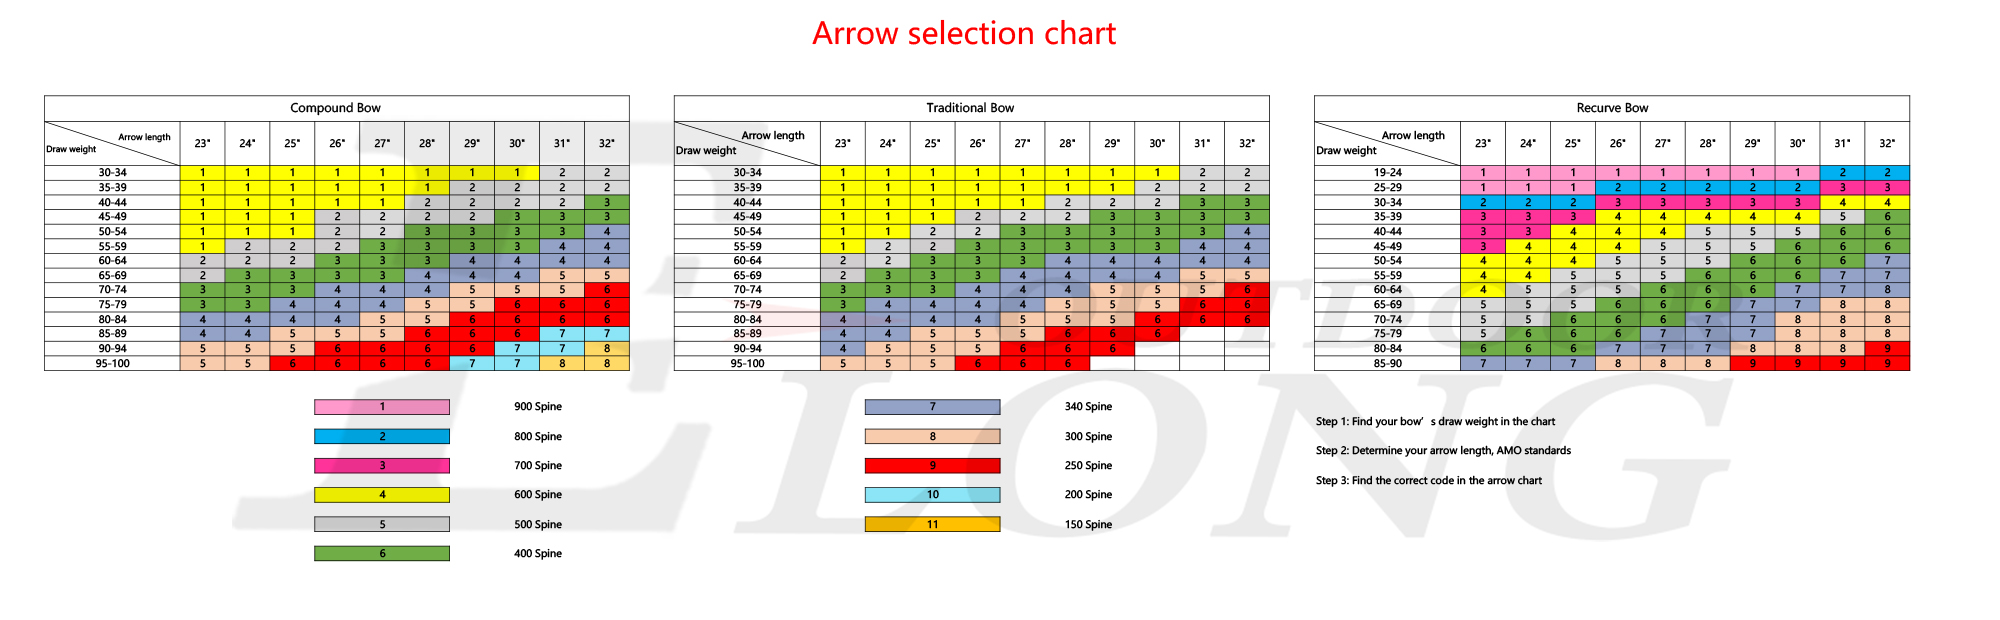 ELONG Arrow selection chart.jpg